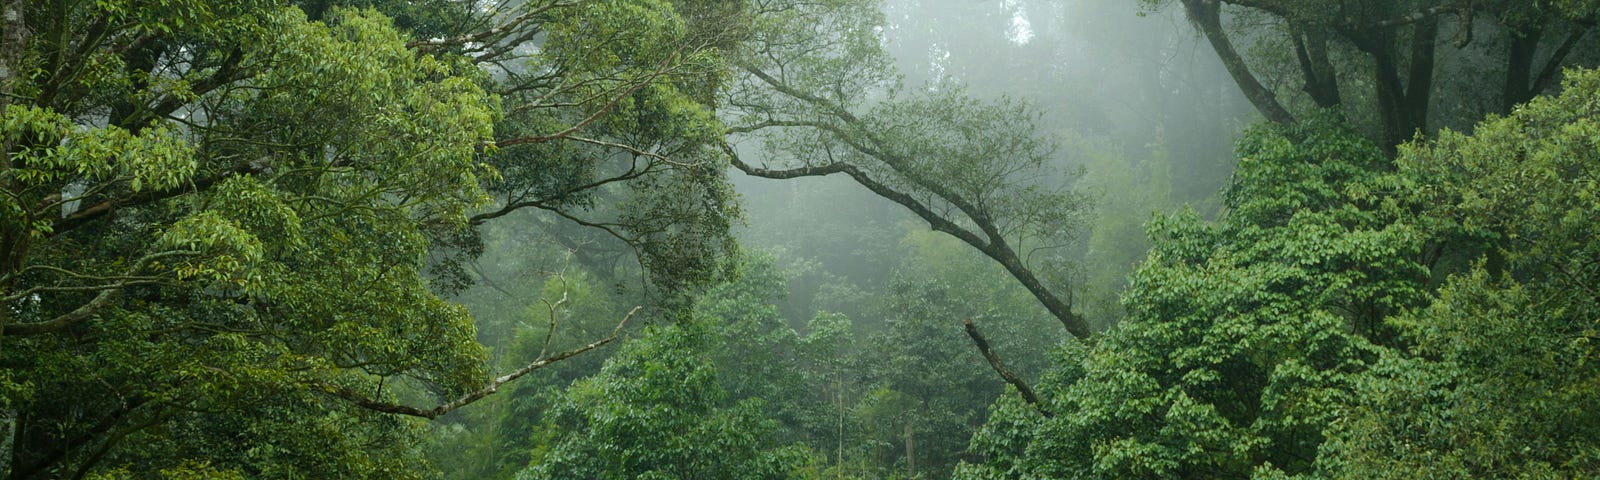 Rainforest canopy